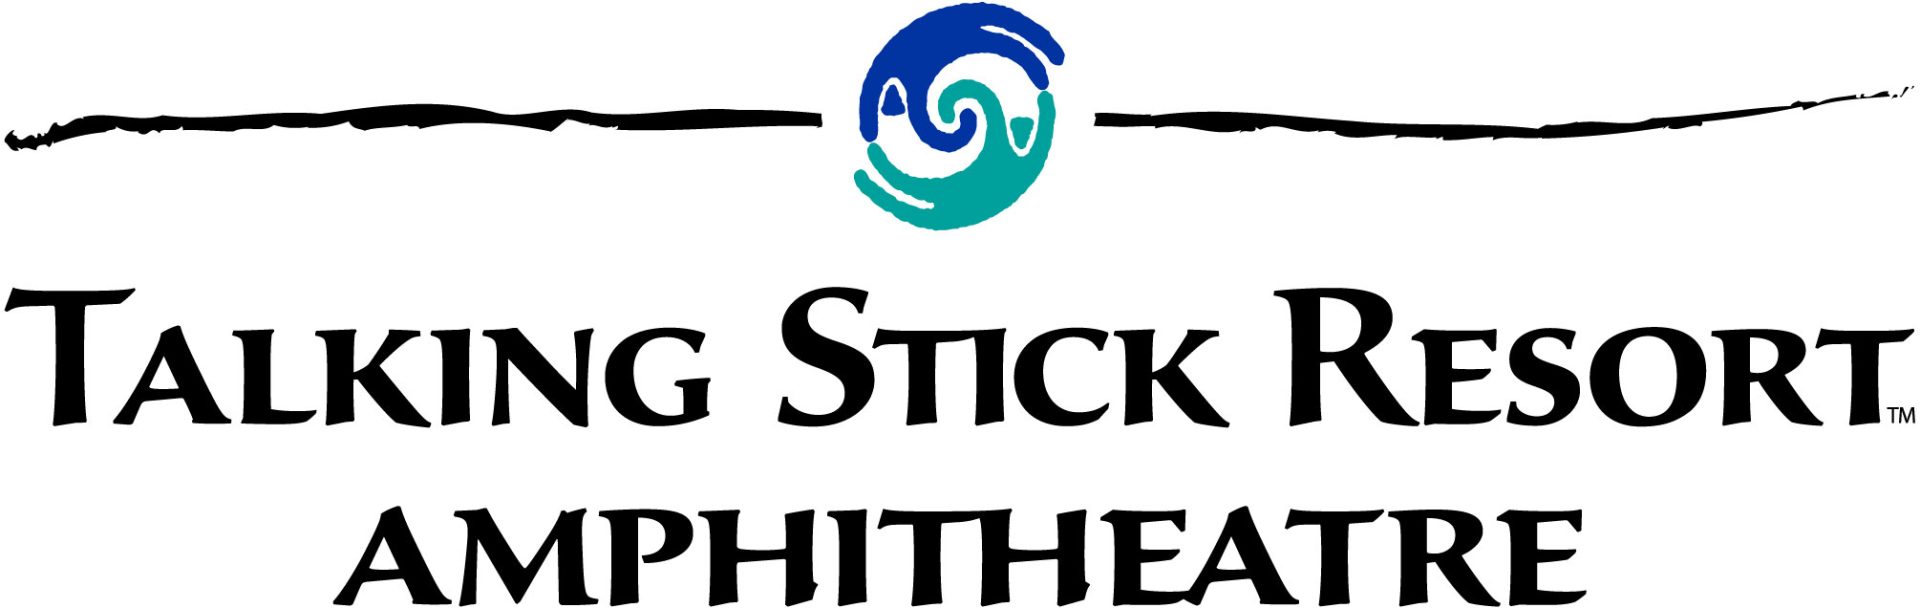 Music Venue Renamed Talking Stick Resort Amphitheatre